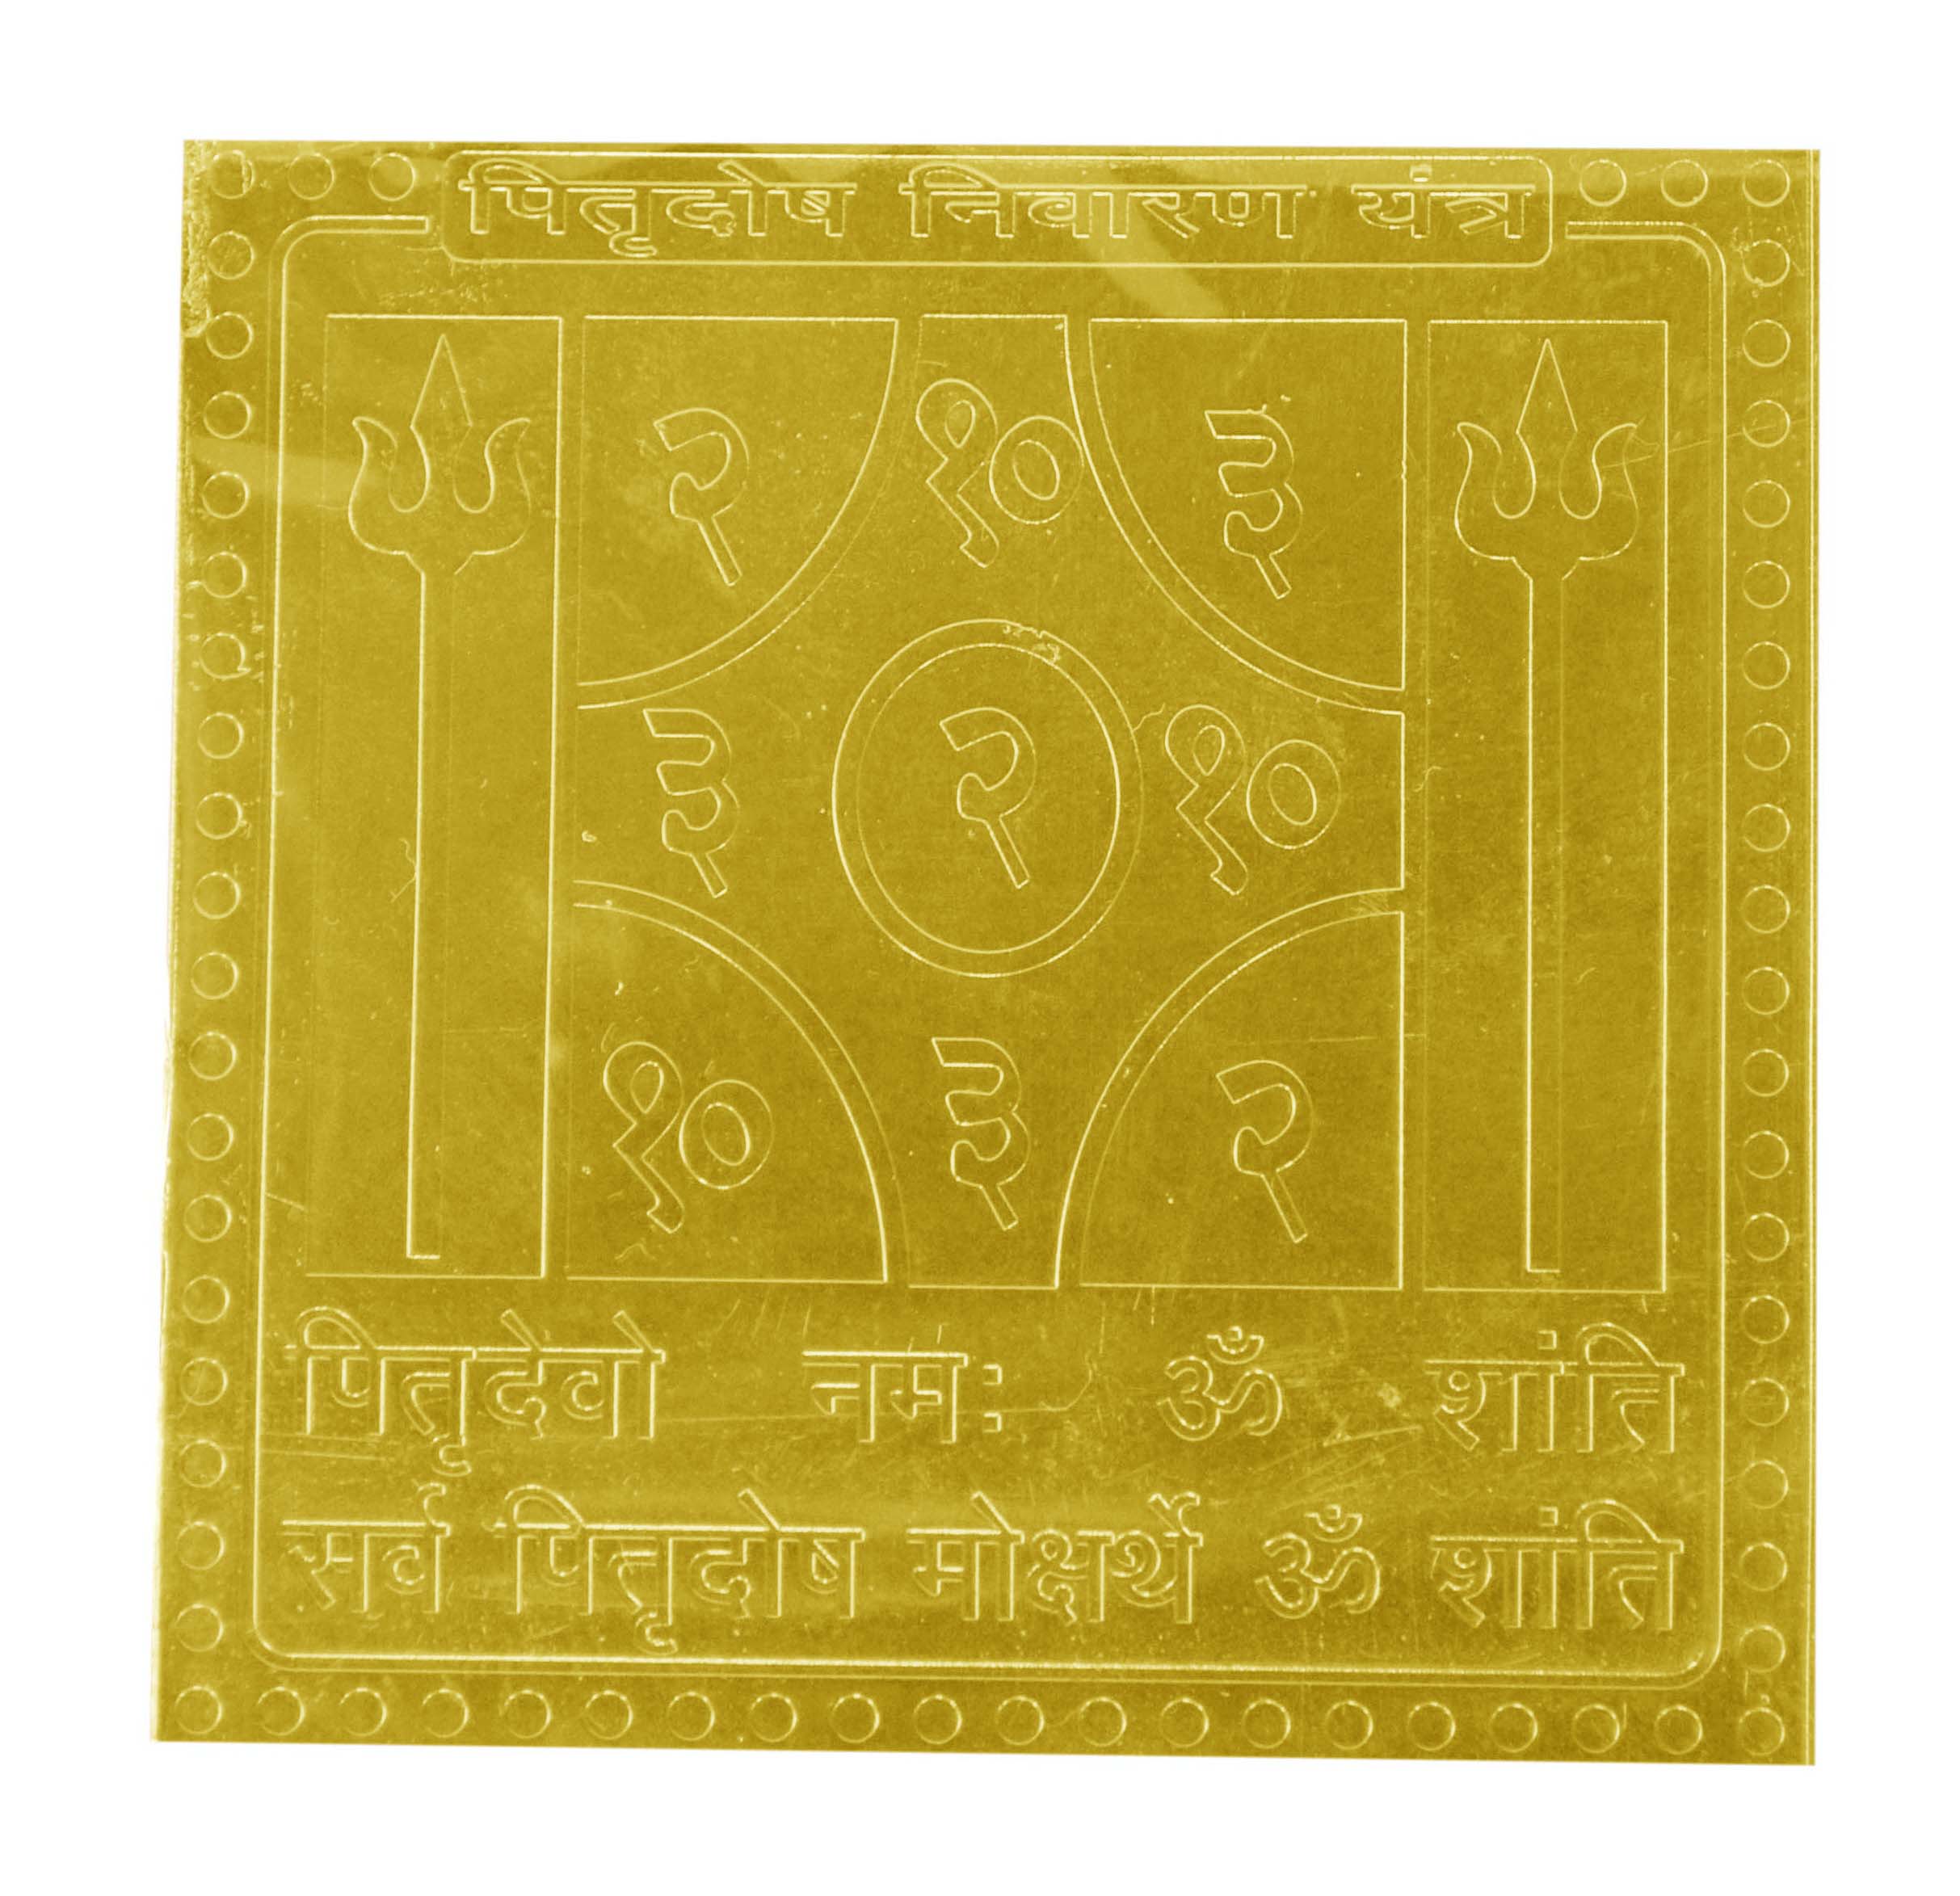 Pitra Dosh Nivaran Yantra In Copper Gold Plated- 1.5 Inches